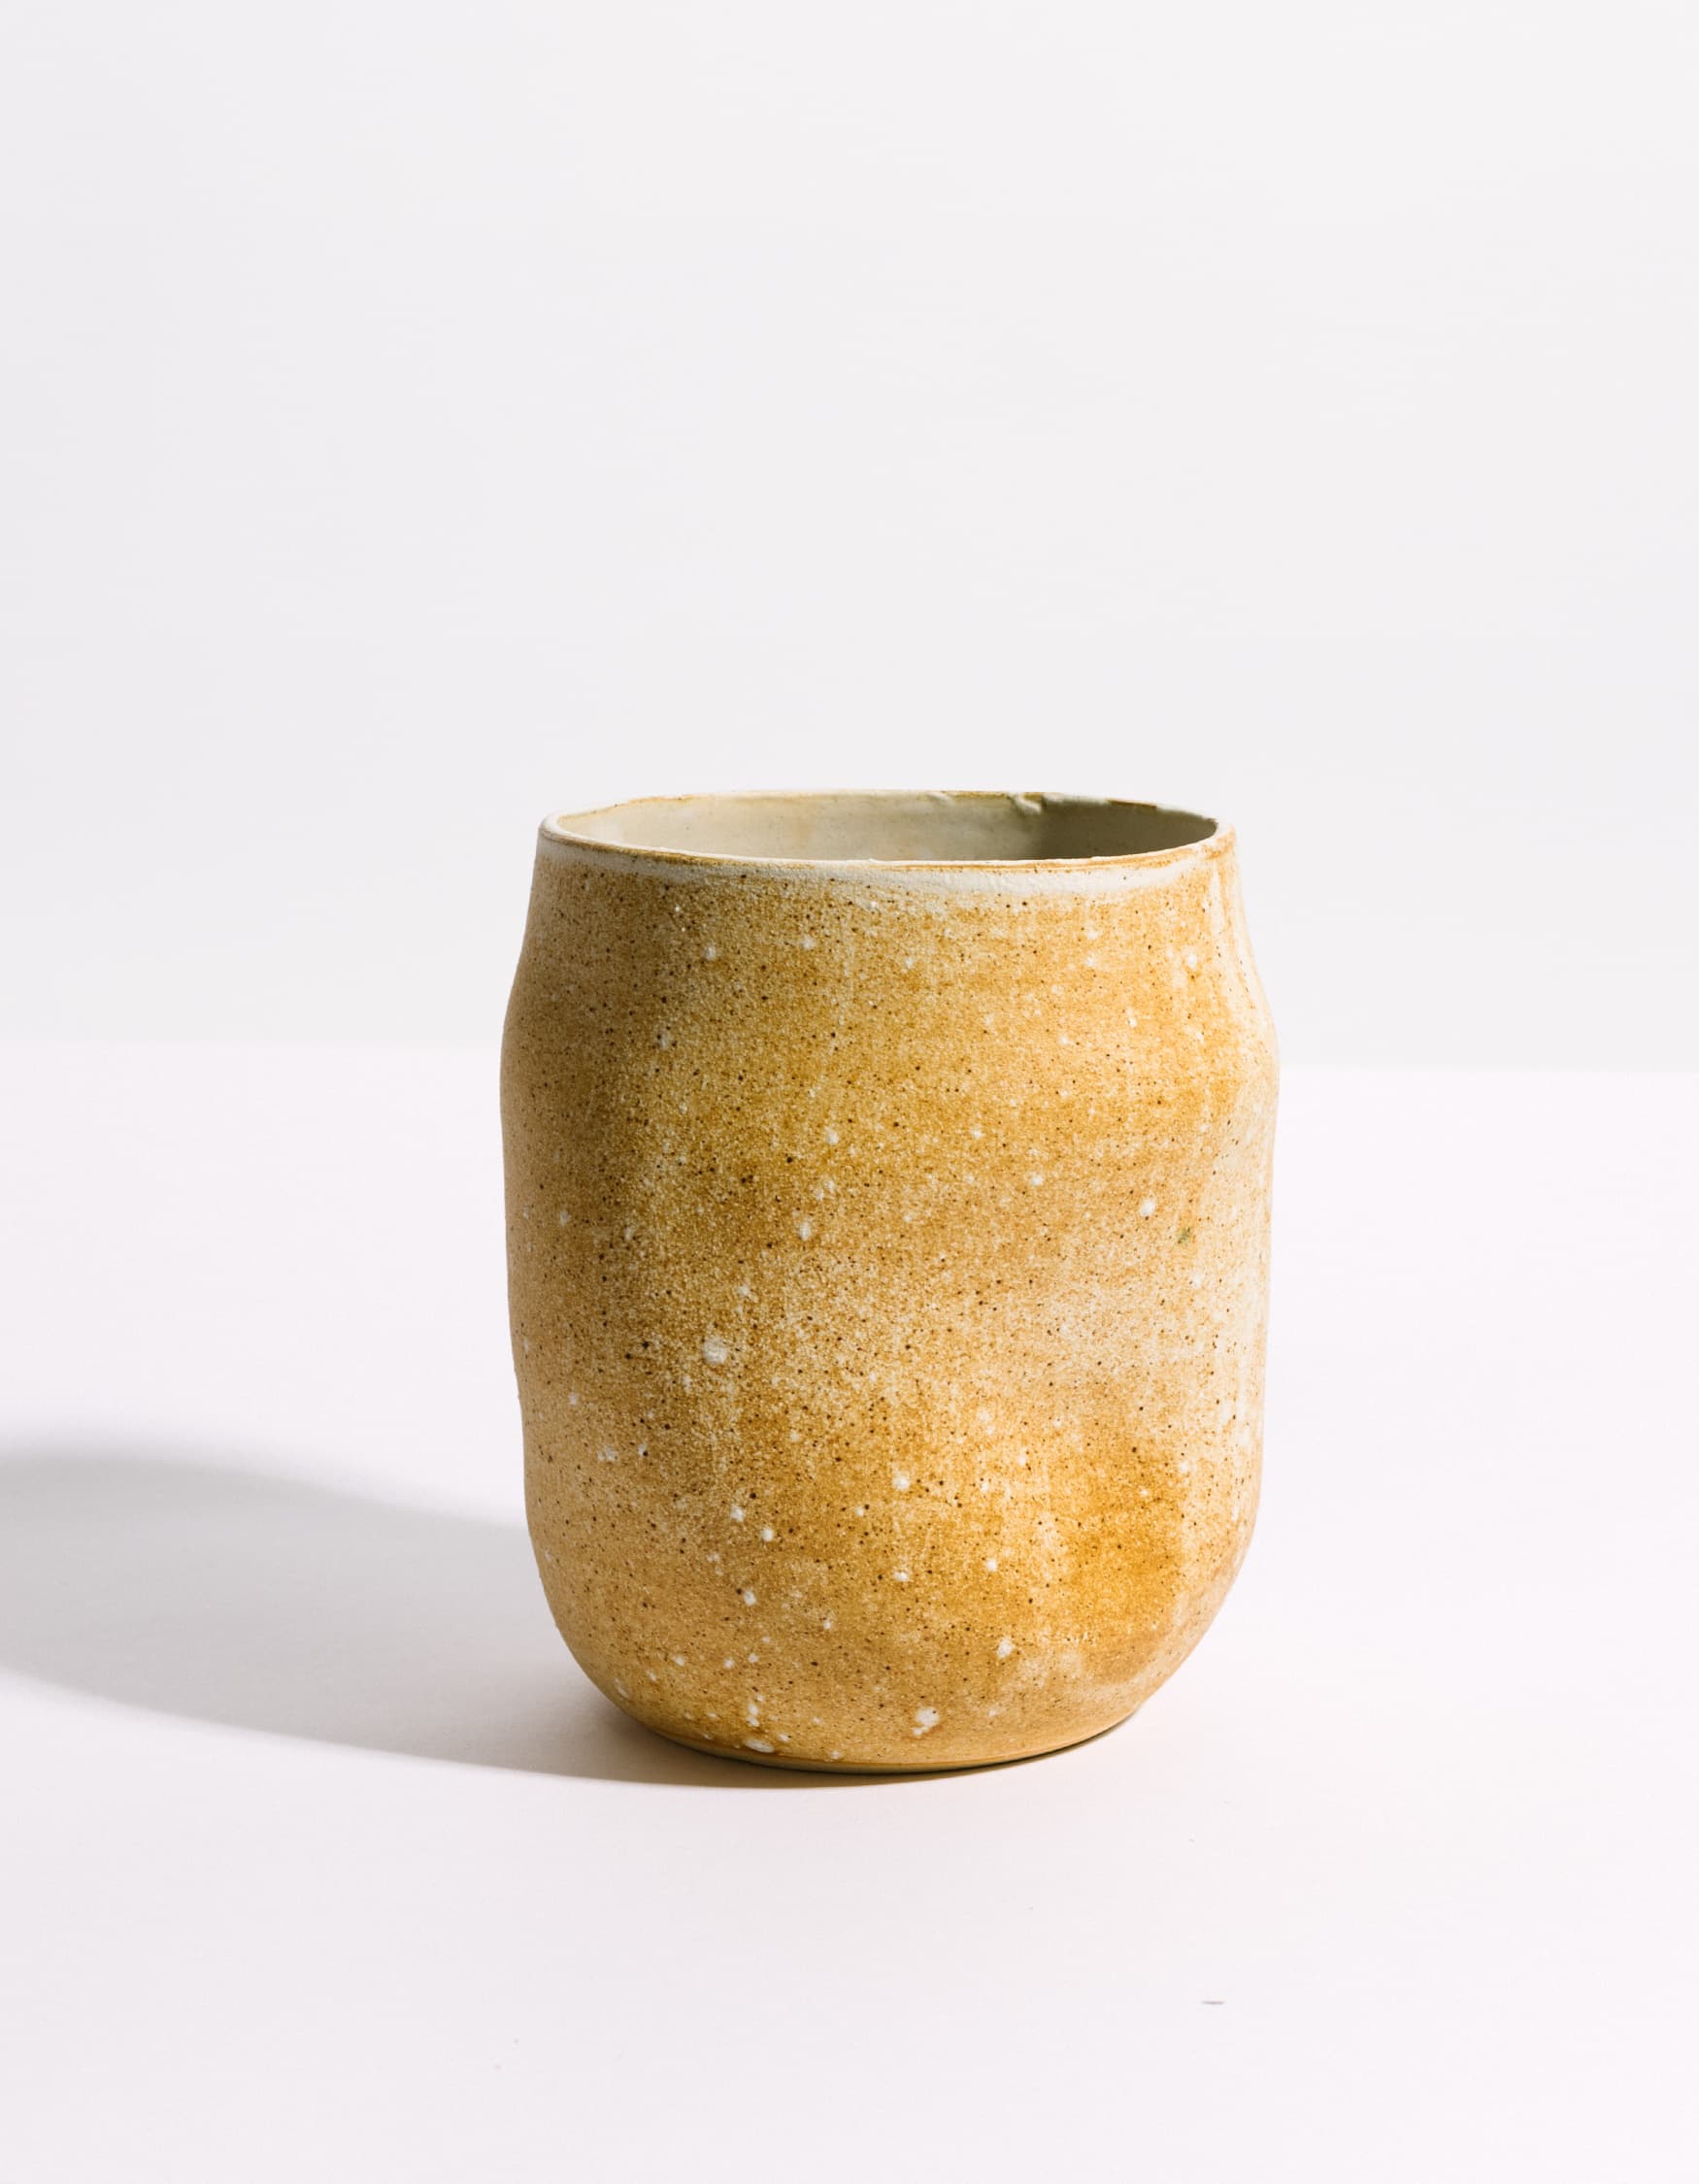 Sandstone Vase No. 2